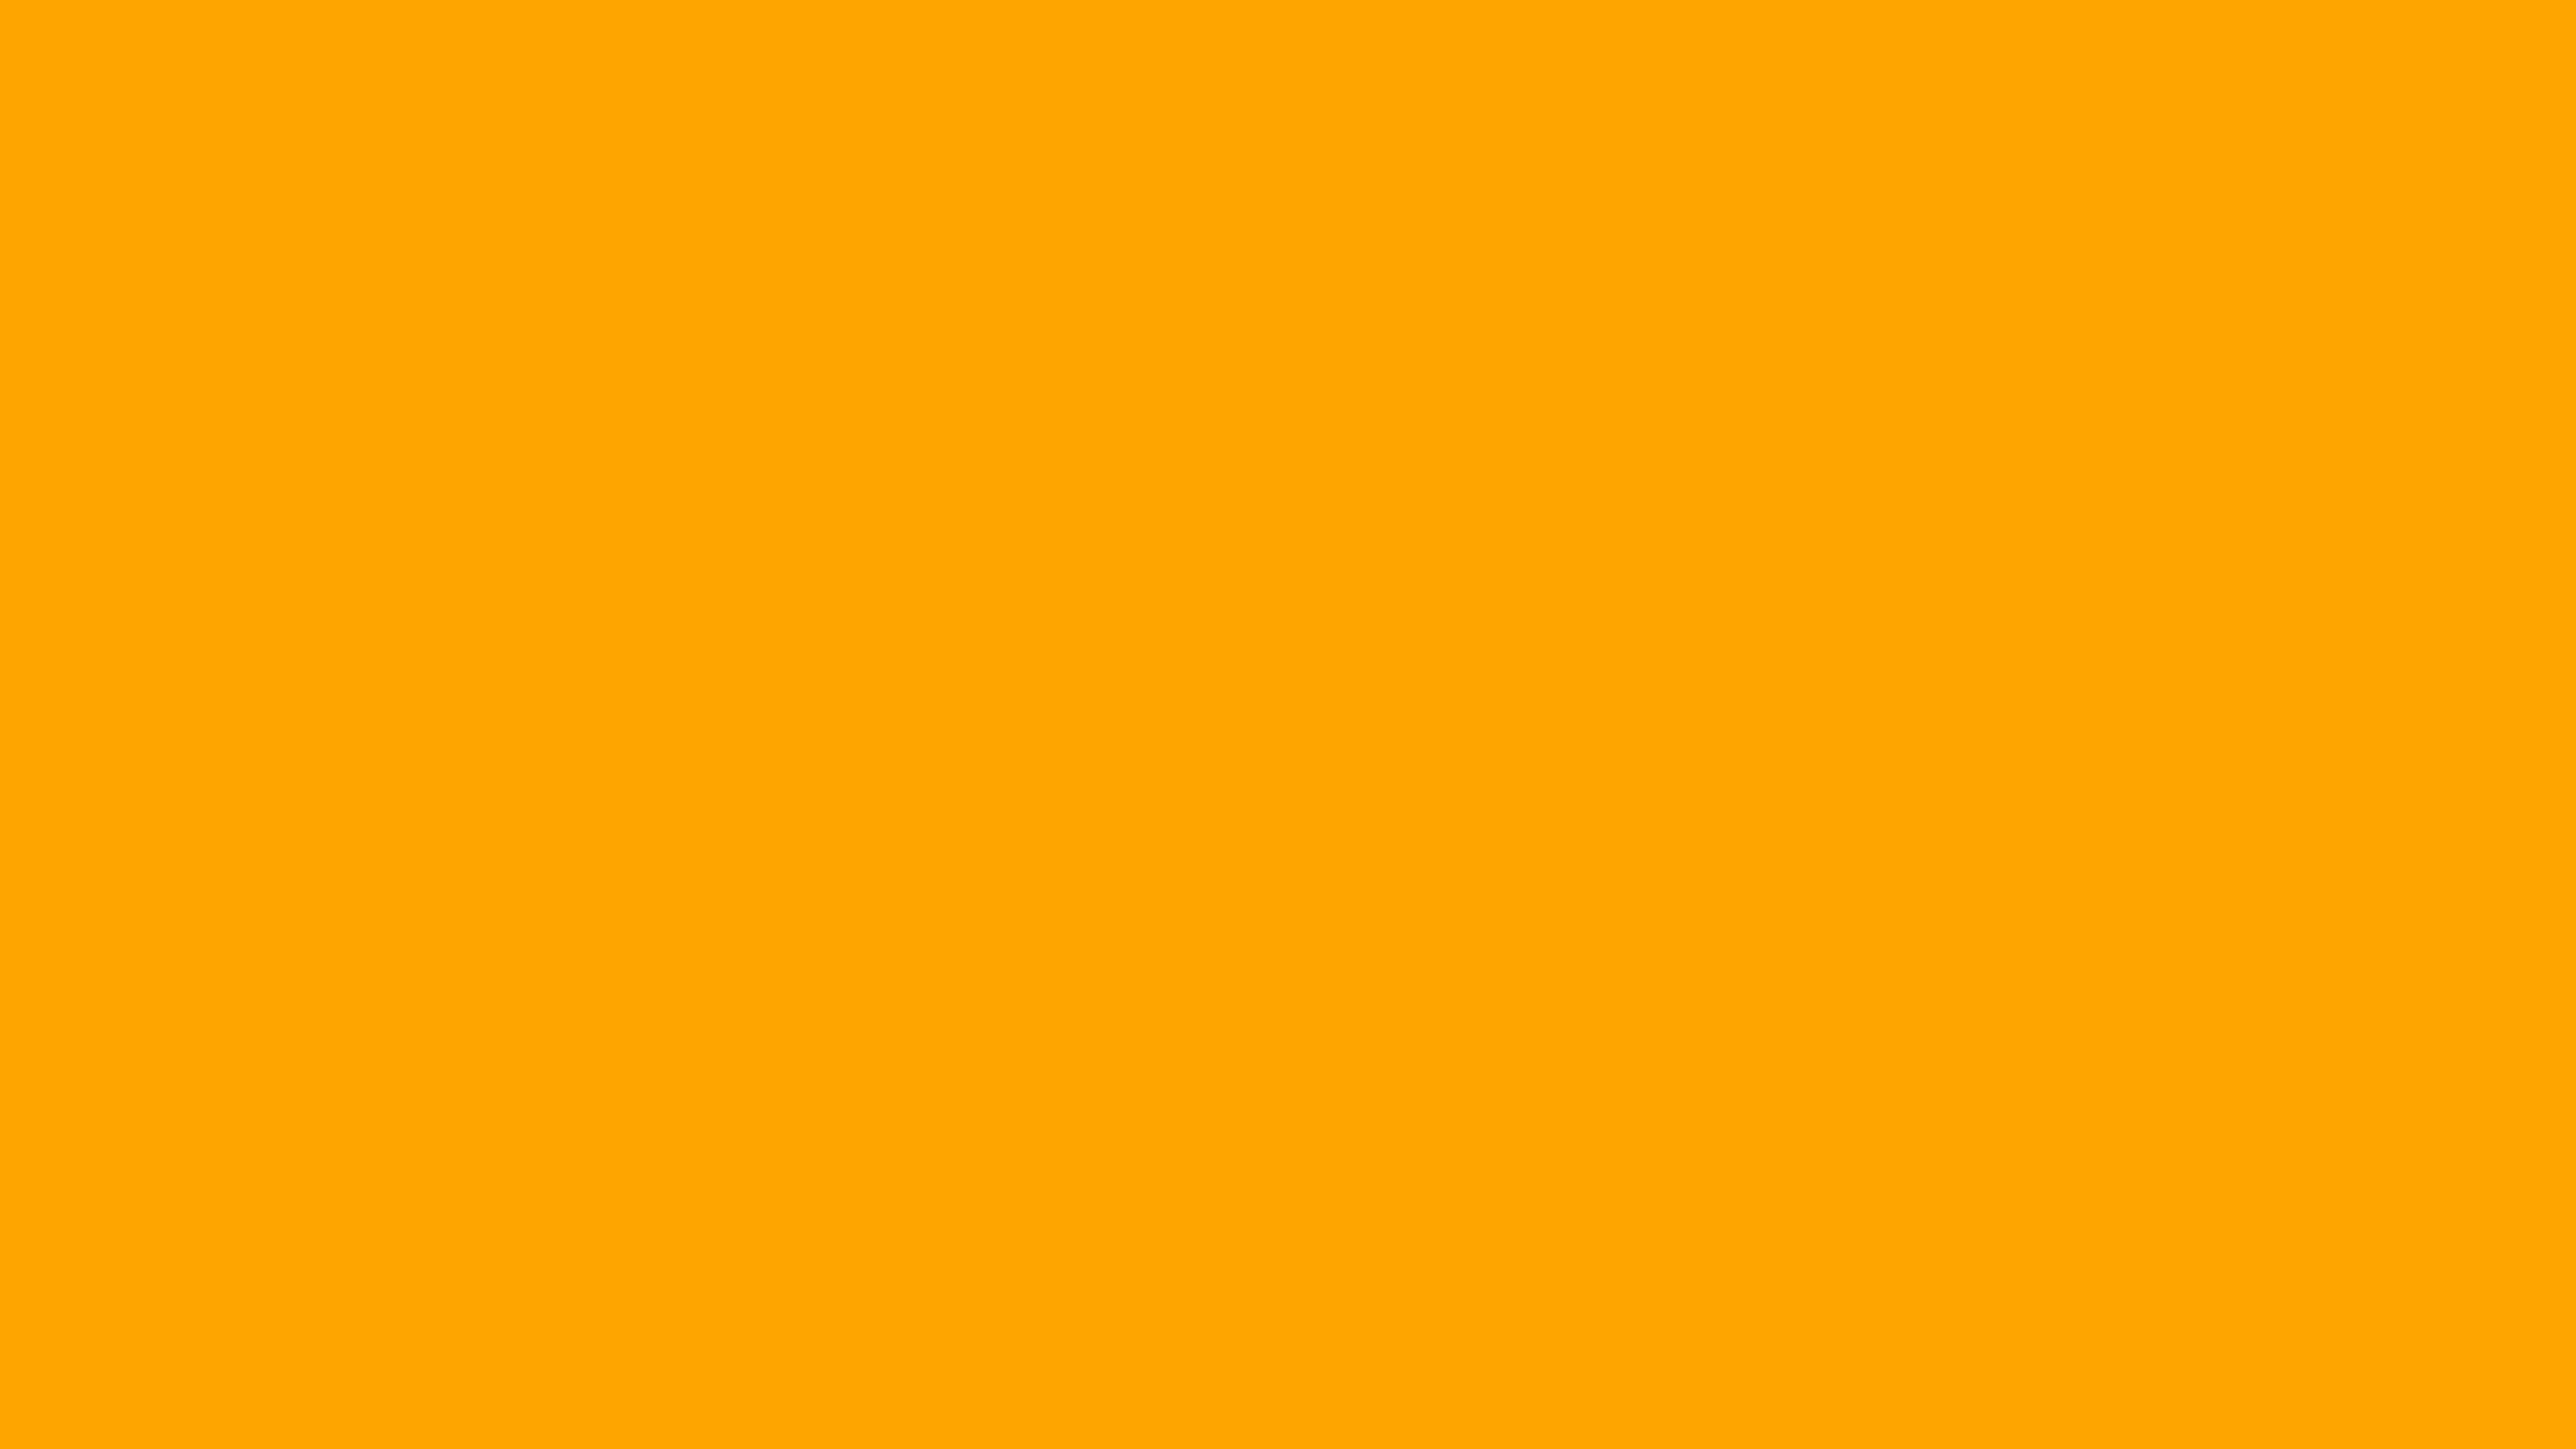 Orange Solid Color Background Image. Free Image Generator